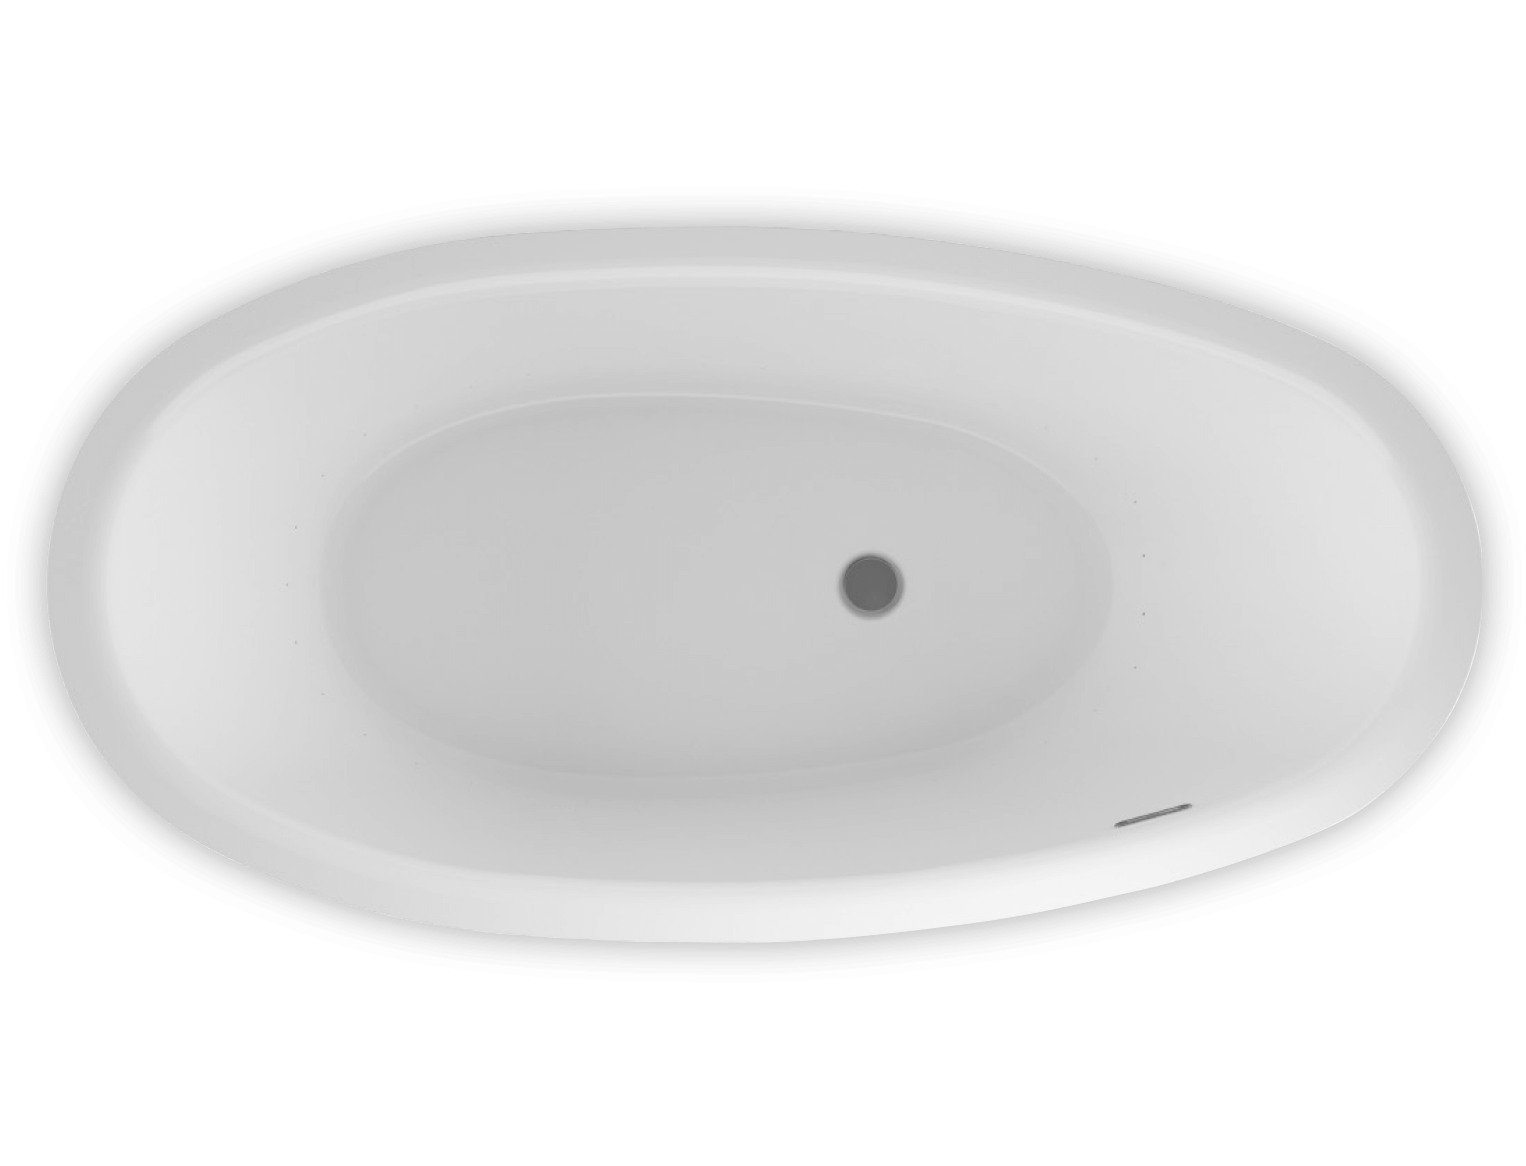 Bainultra Essencia Design freestanding air jet bathtub for your master bathroom